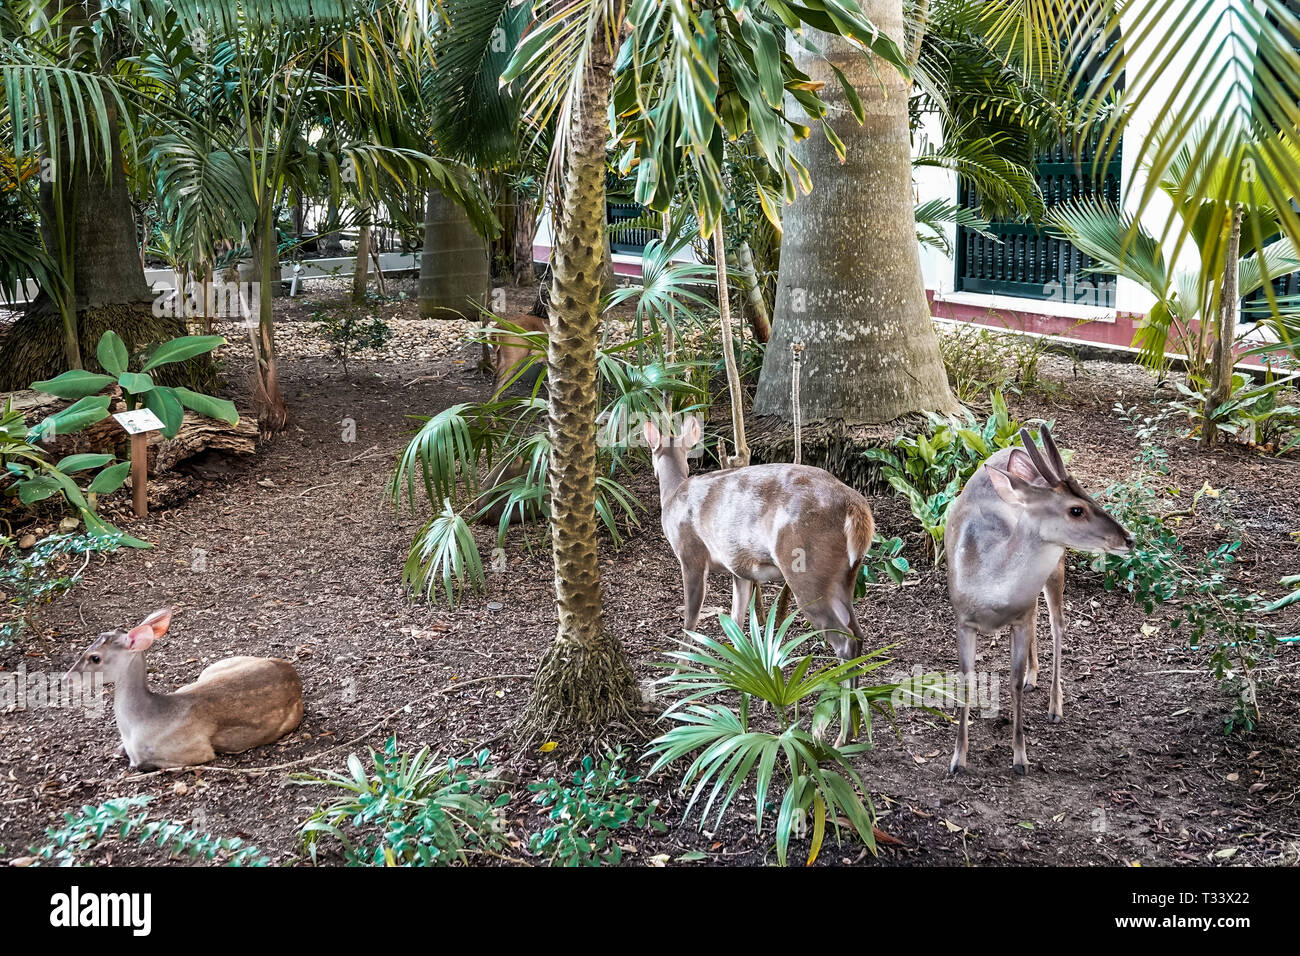 Cartagena Colombia,Bocagrande,Hotel Caribe,hotel,small deer,courtyard,garden zoo,COL190121113 Stock Photo